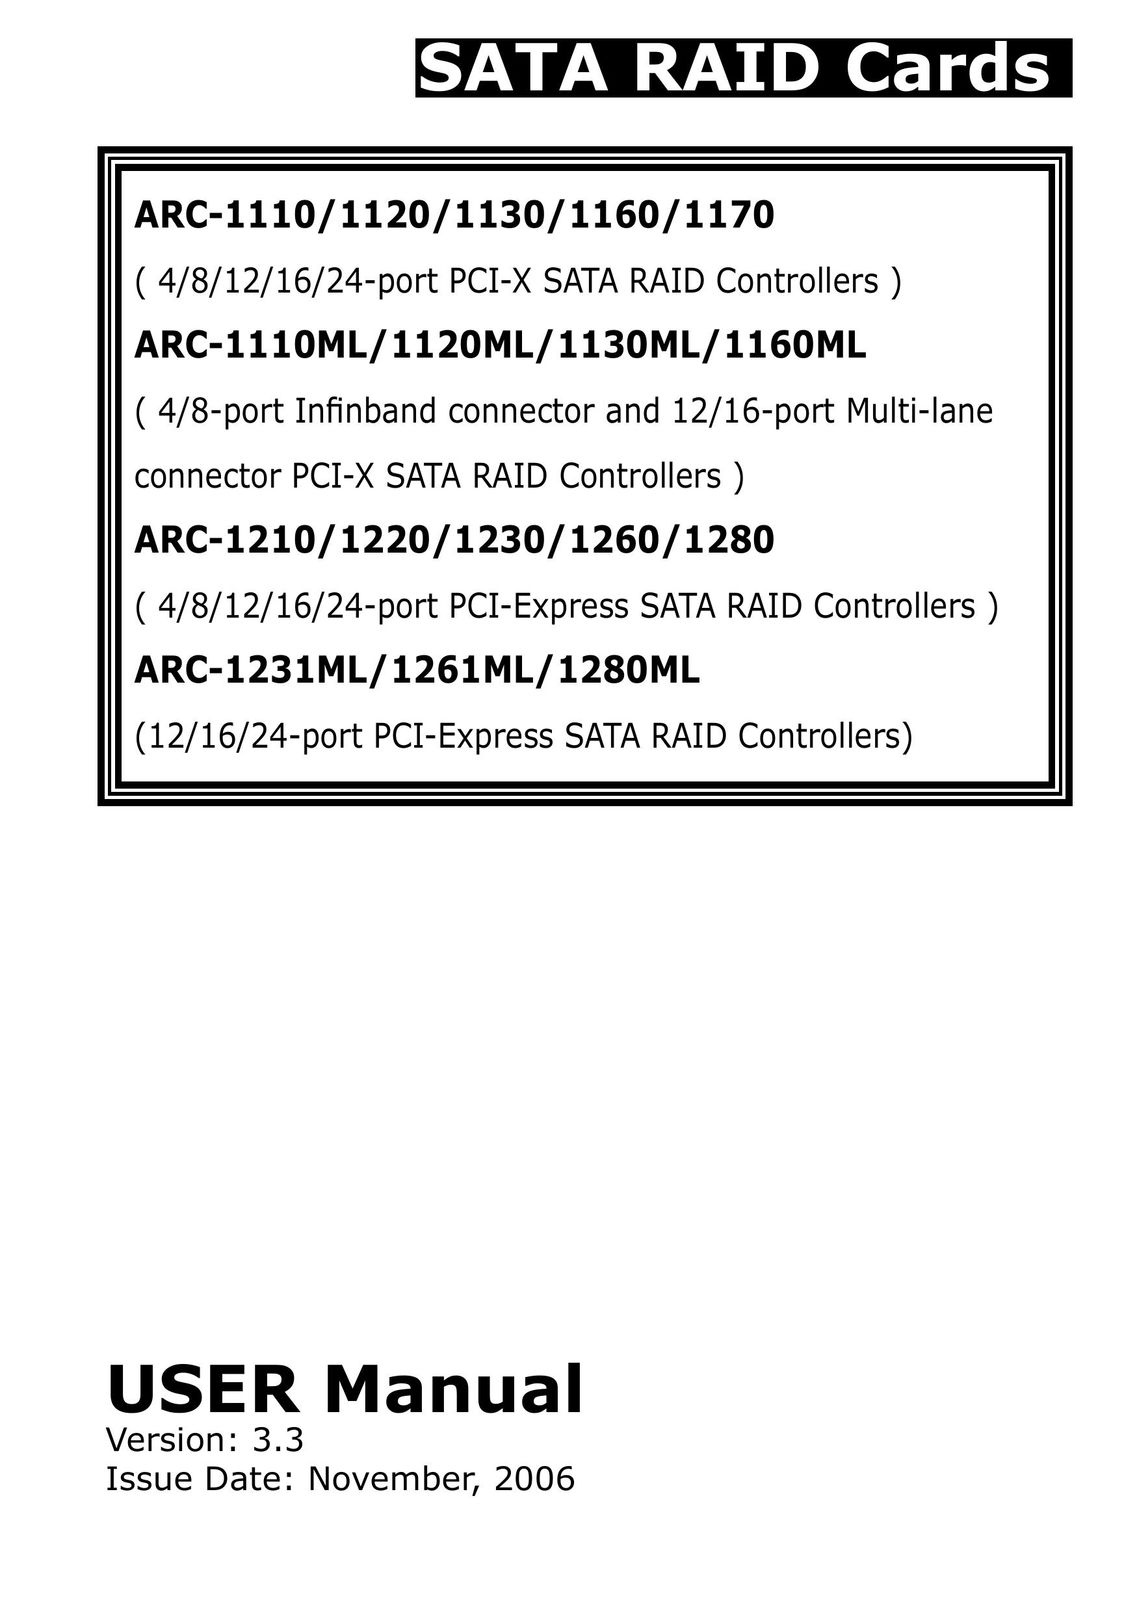 Areca ARC-1120 Computer Hardware User Manual